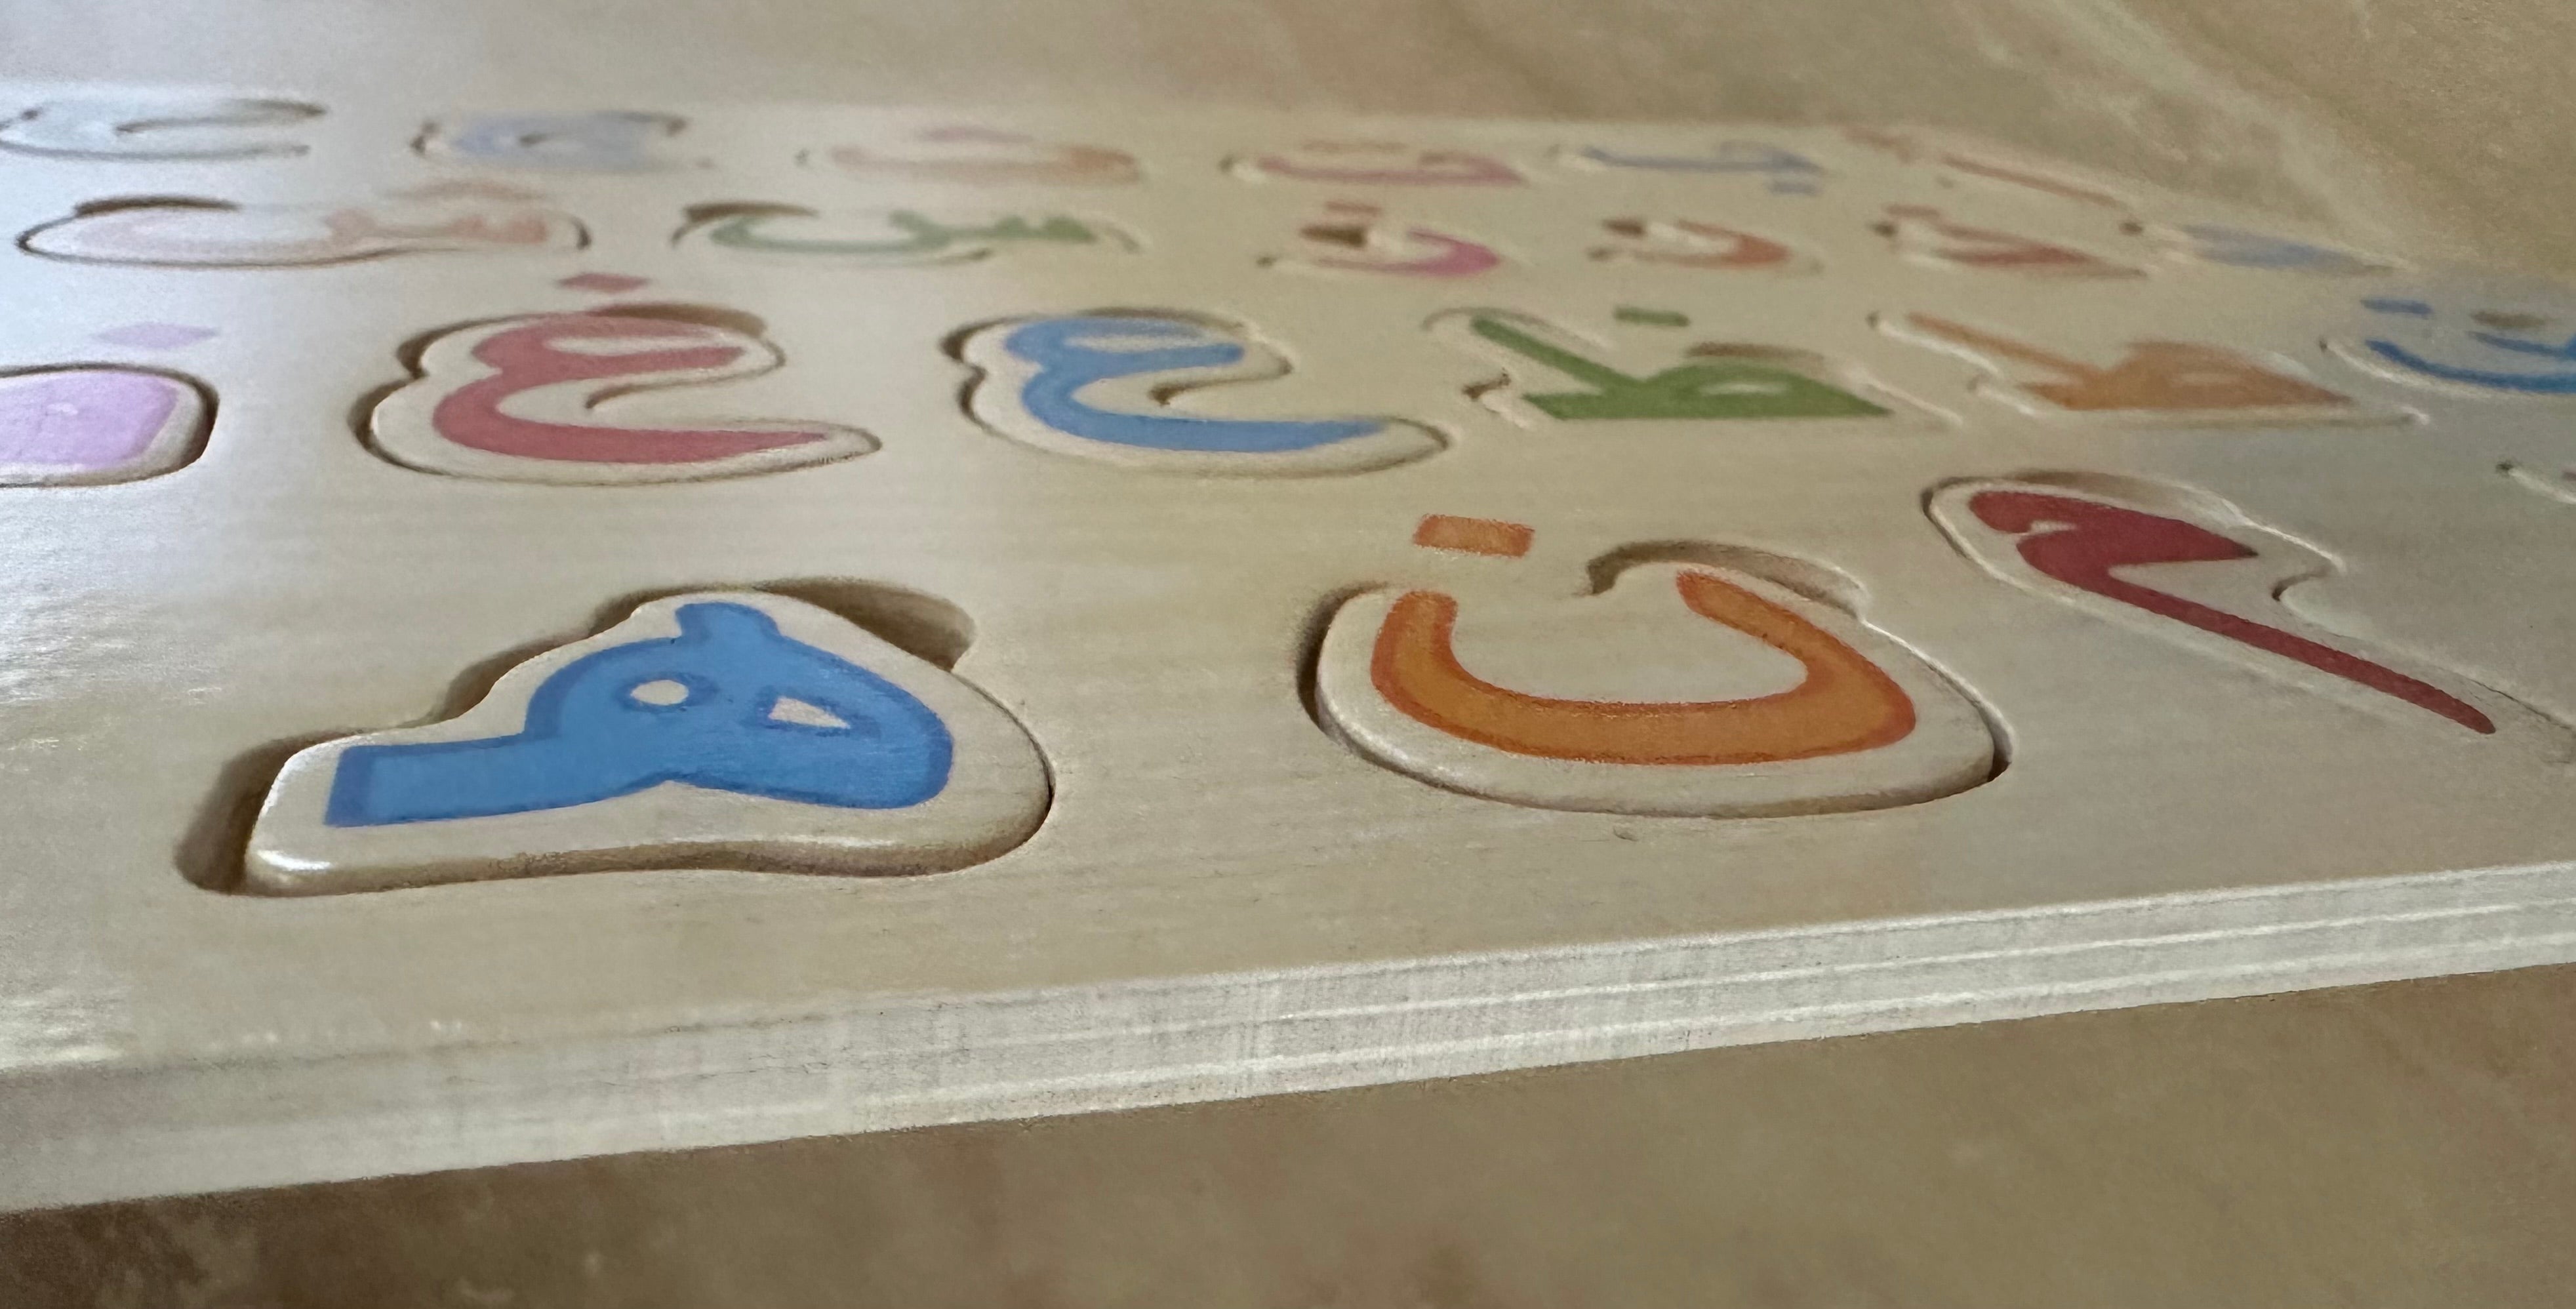 Wooden Arabic Alphabet Puzzle - light